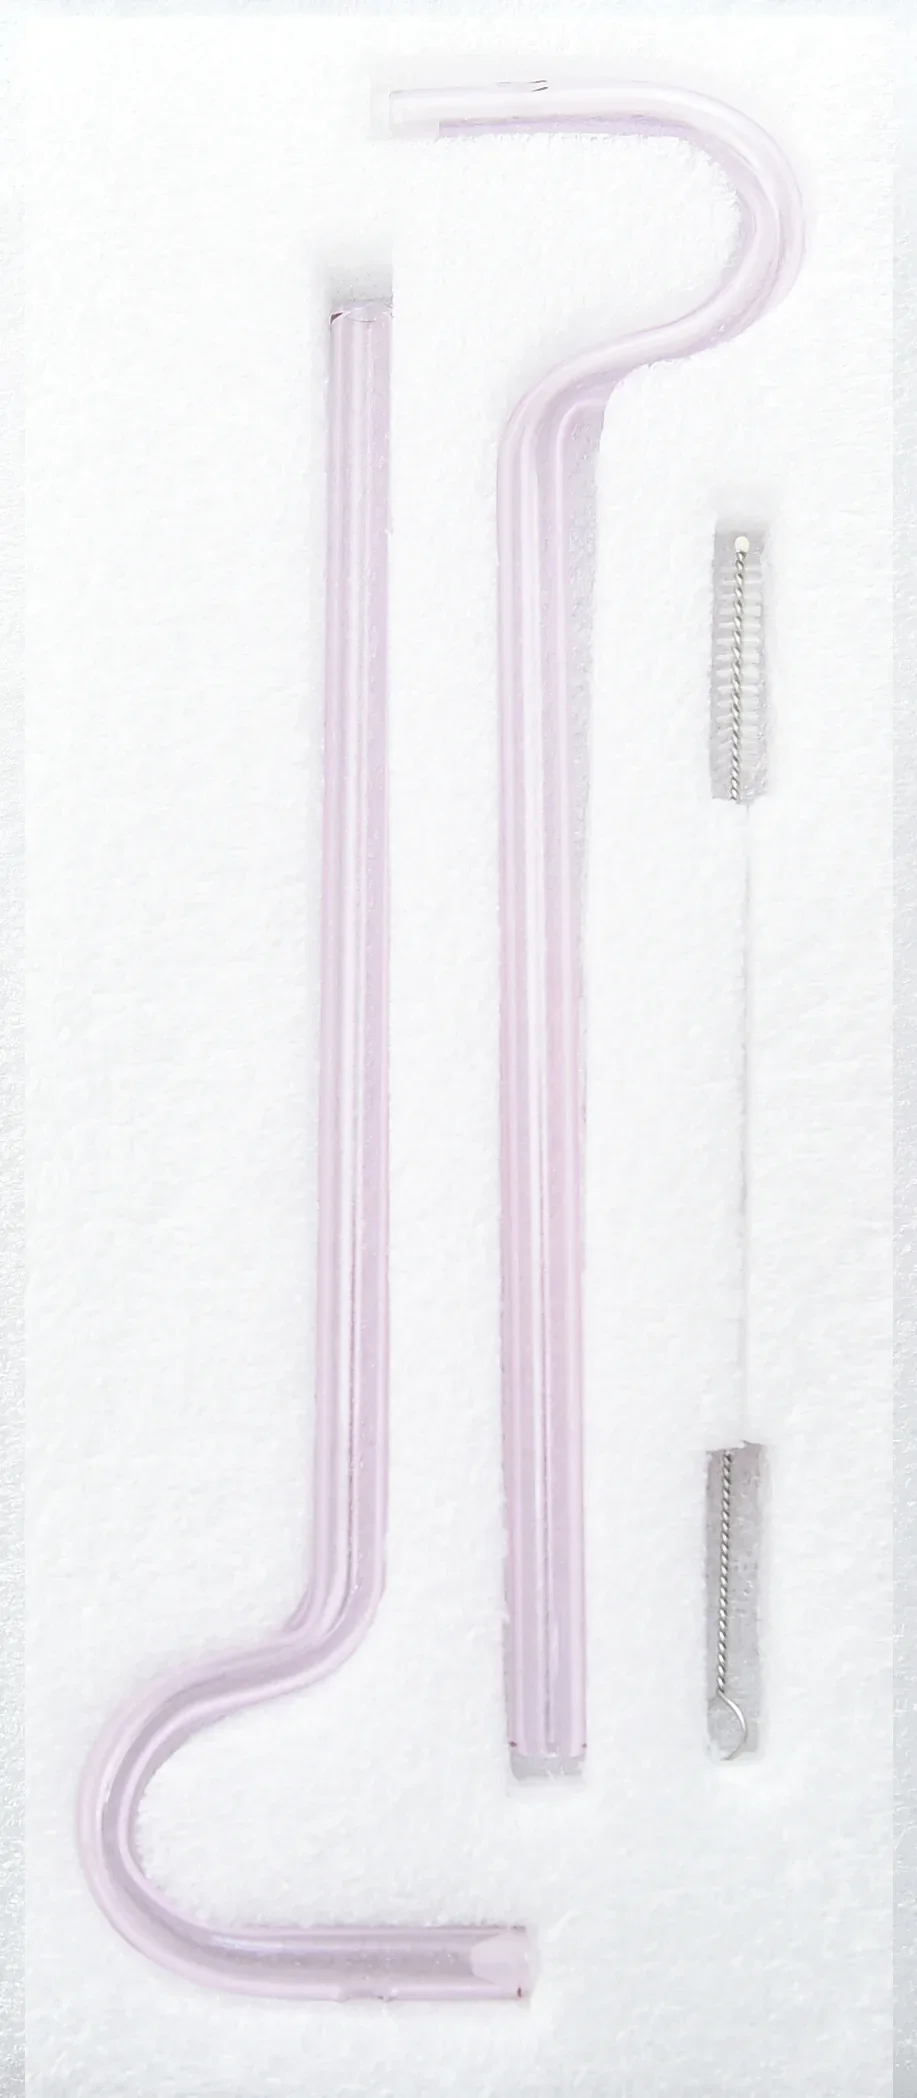 https://ae01.alicdn.com/kf/S858ed57e7fd240b0acf69dab67adba50x/Fashion-Anti-Wrinkle-Straw-Reusable-Glass-Drinking-Straw-Curved-No-Wrinkle-Straws-Prevent-Wrinkles-Sideways-Straws.jpg